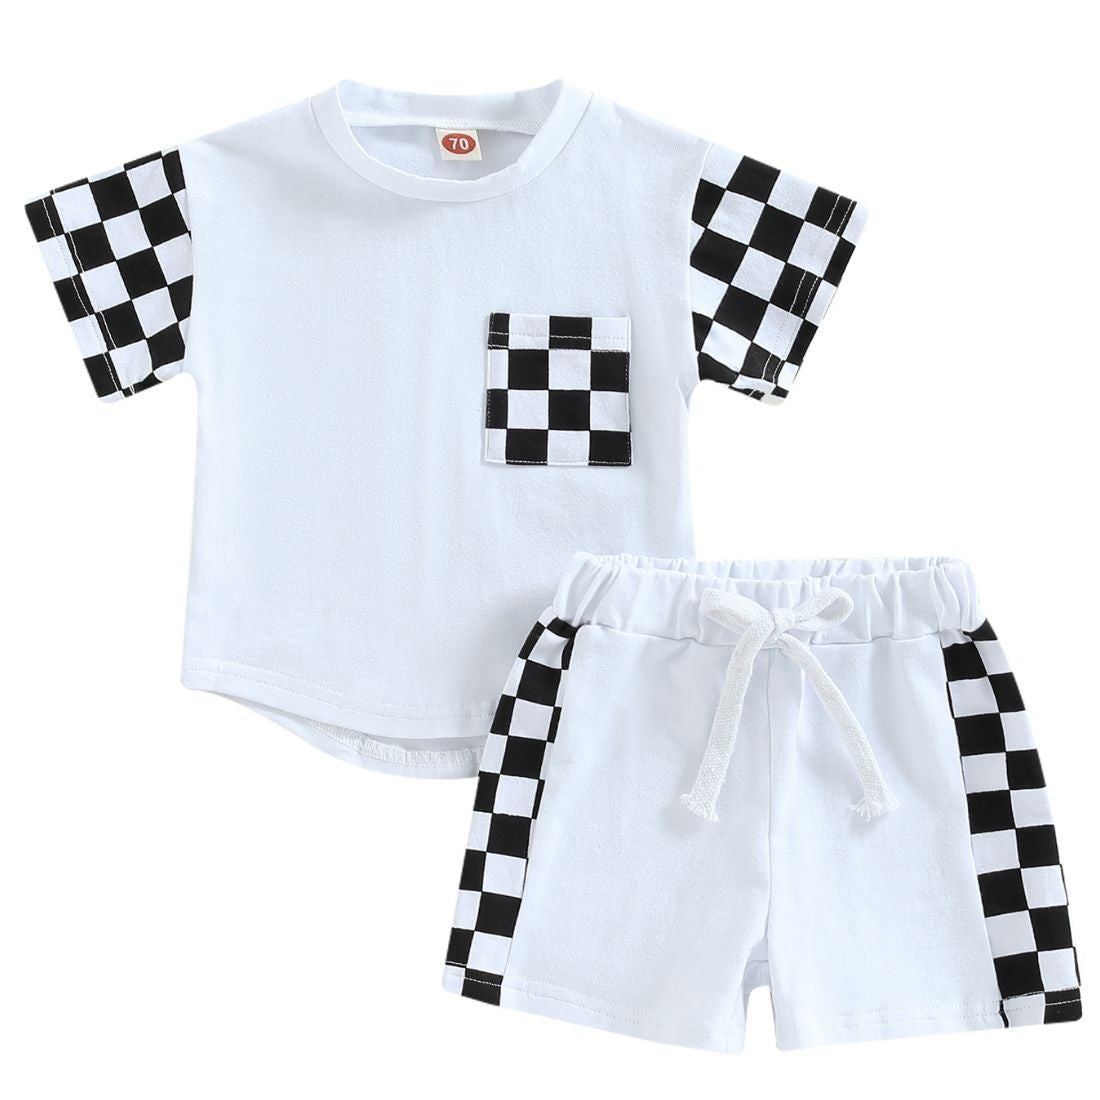 Checkers Crew Baby Boy Clothing Set